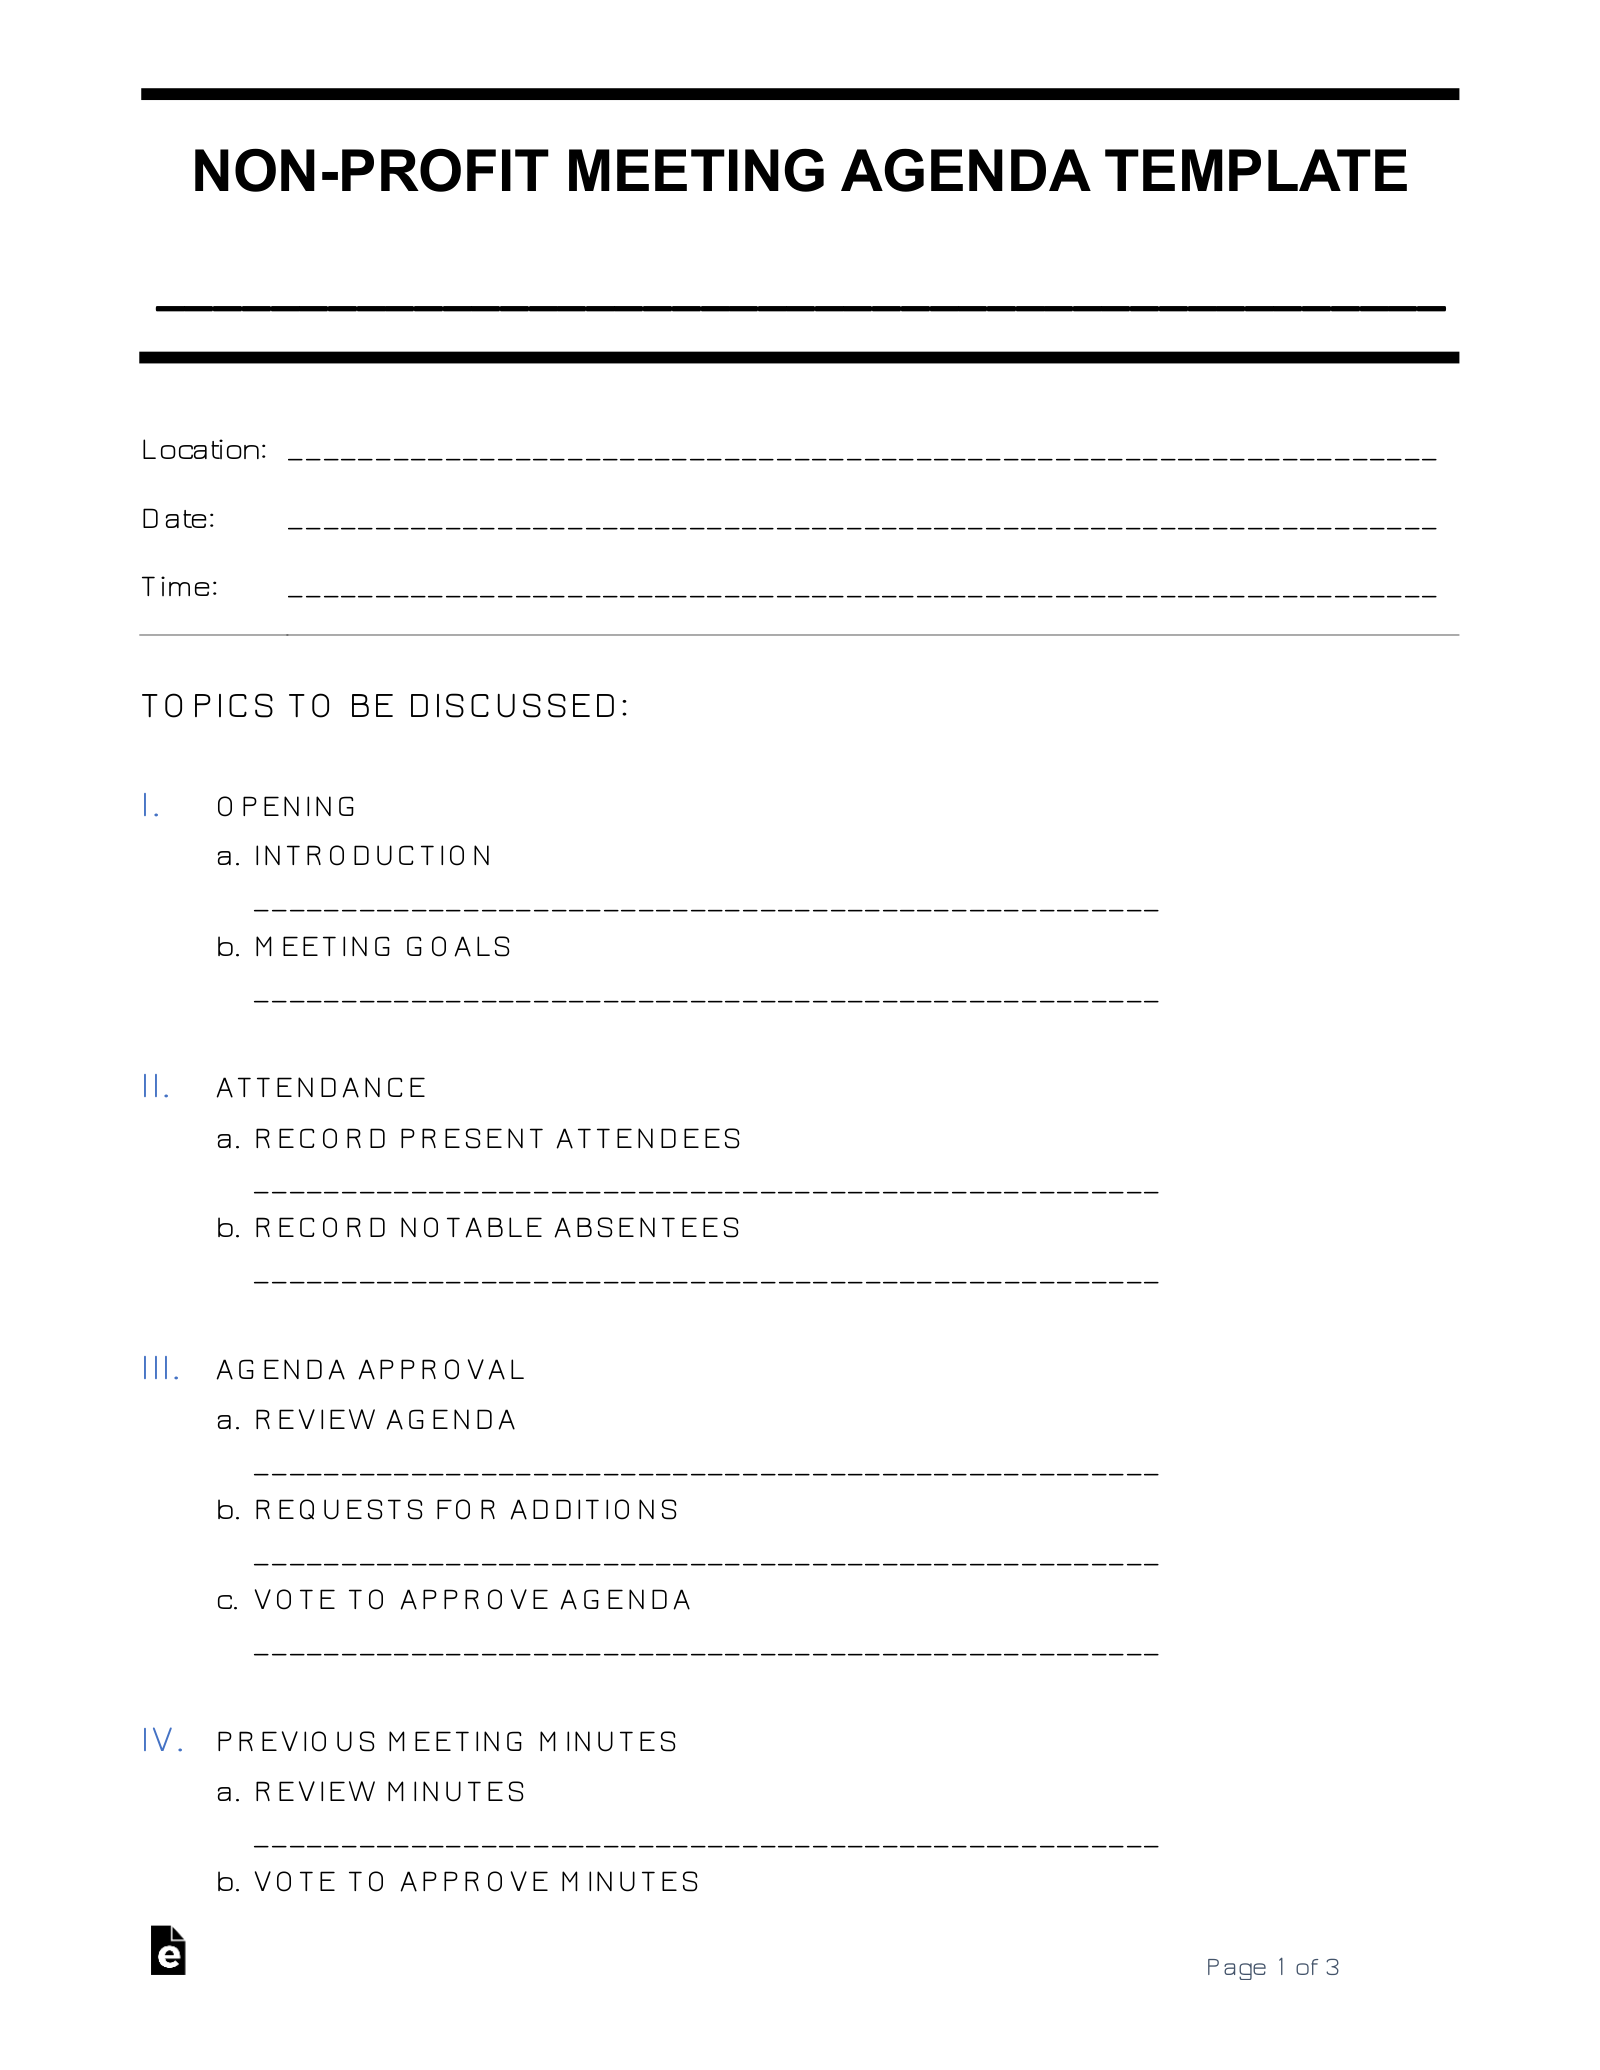 free-non-profit-meeting-agenda-template-sample-pdf-word-eforms